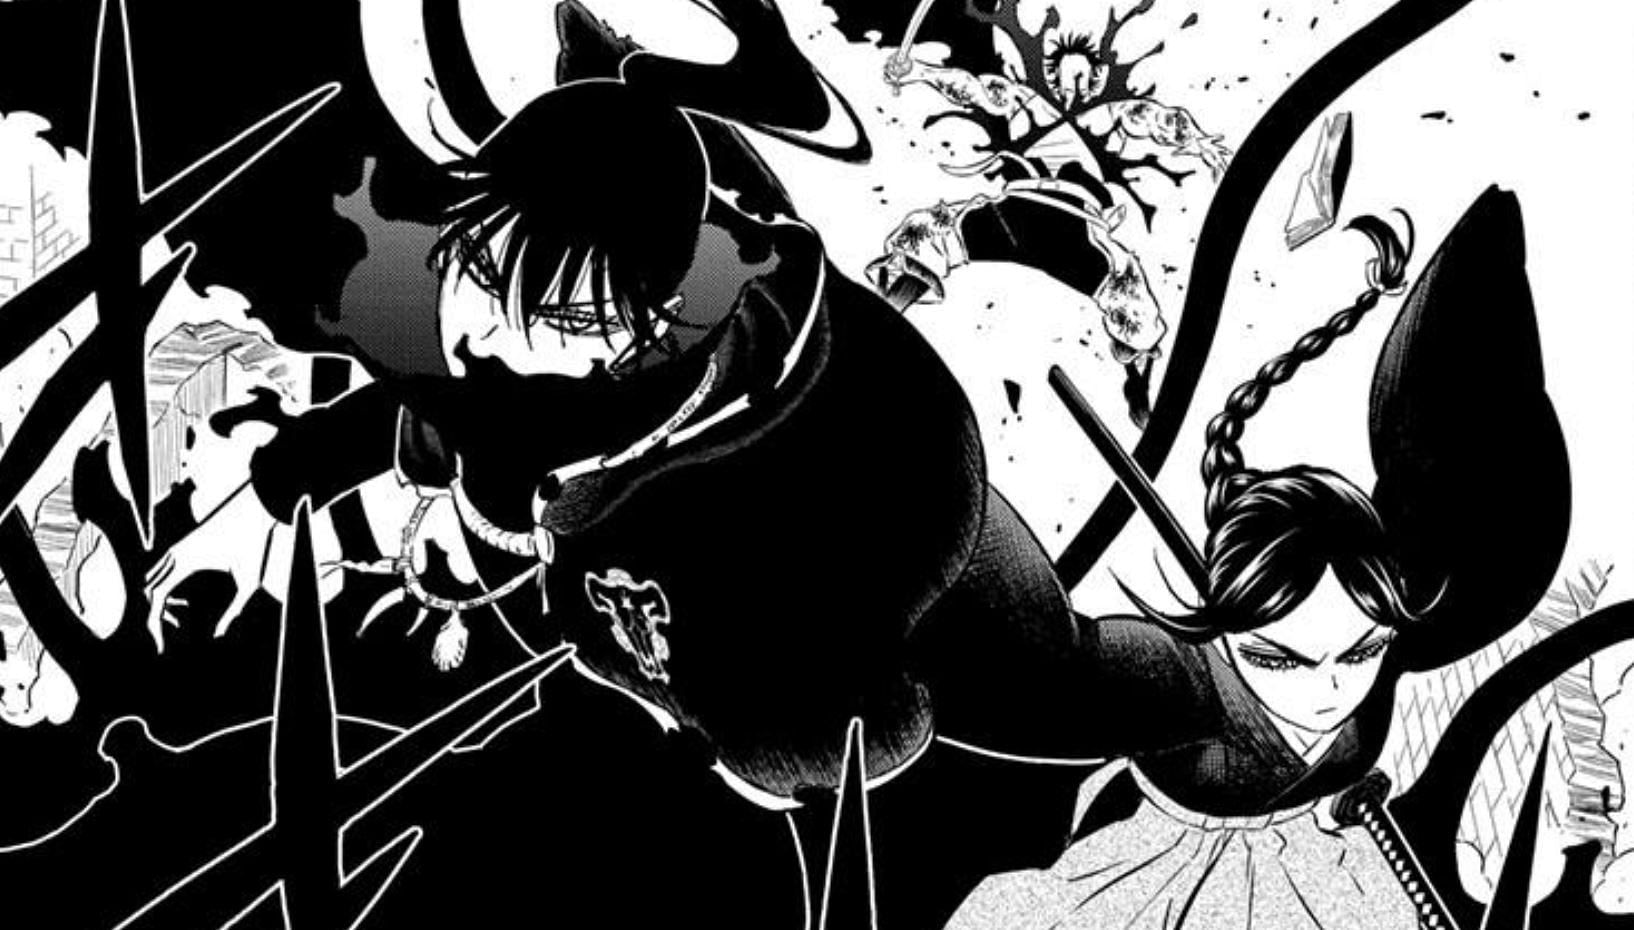 Nacht and Ichika as seen in Black Clover manga (Image via Shueisha)